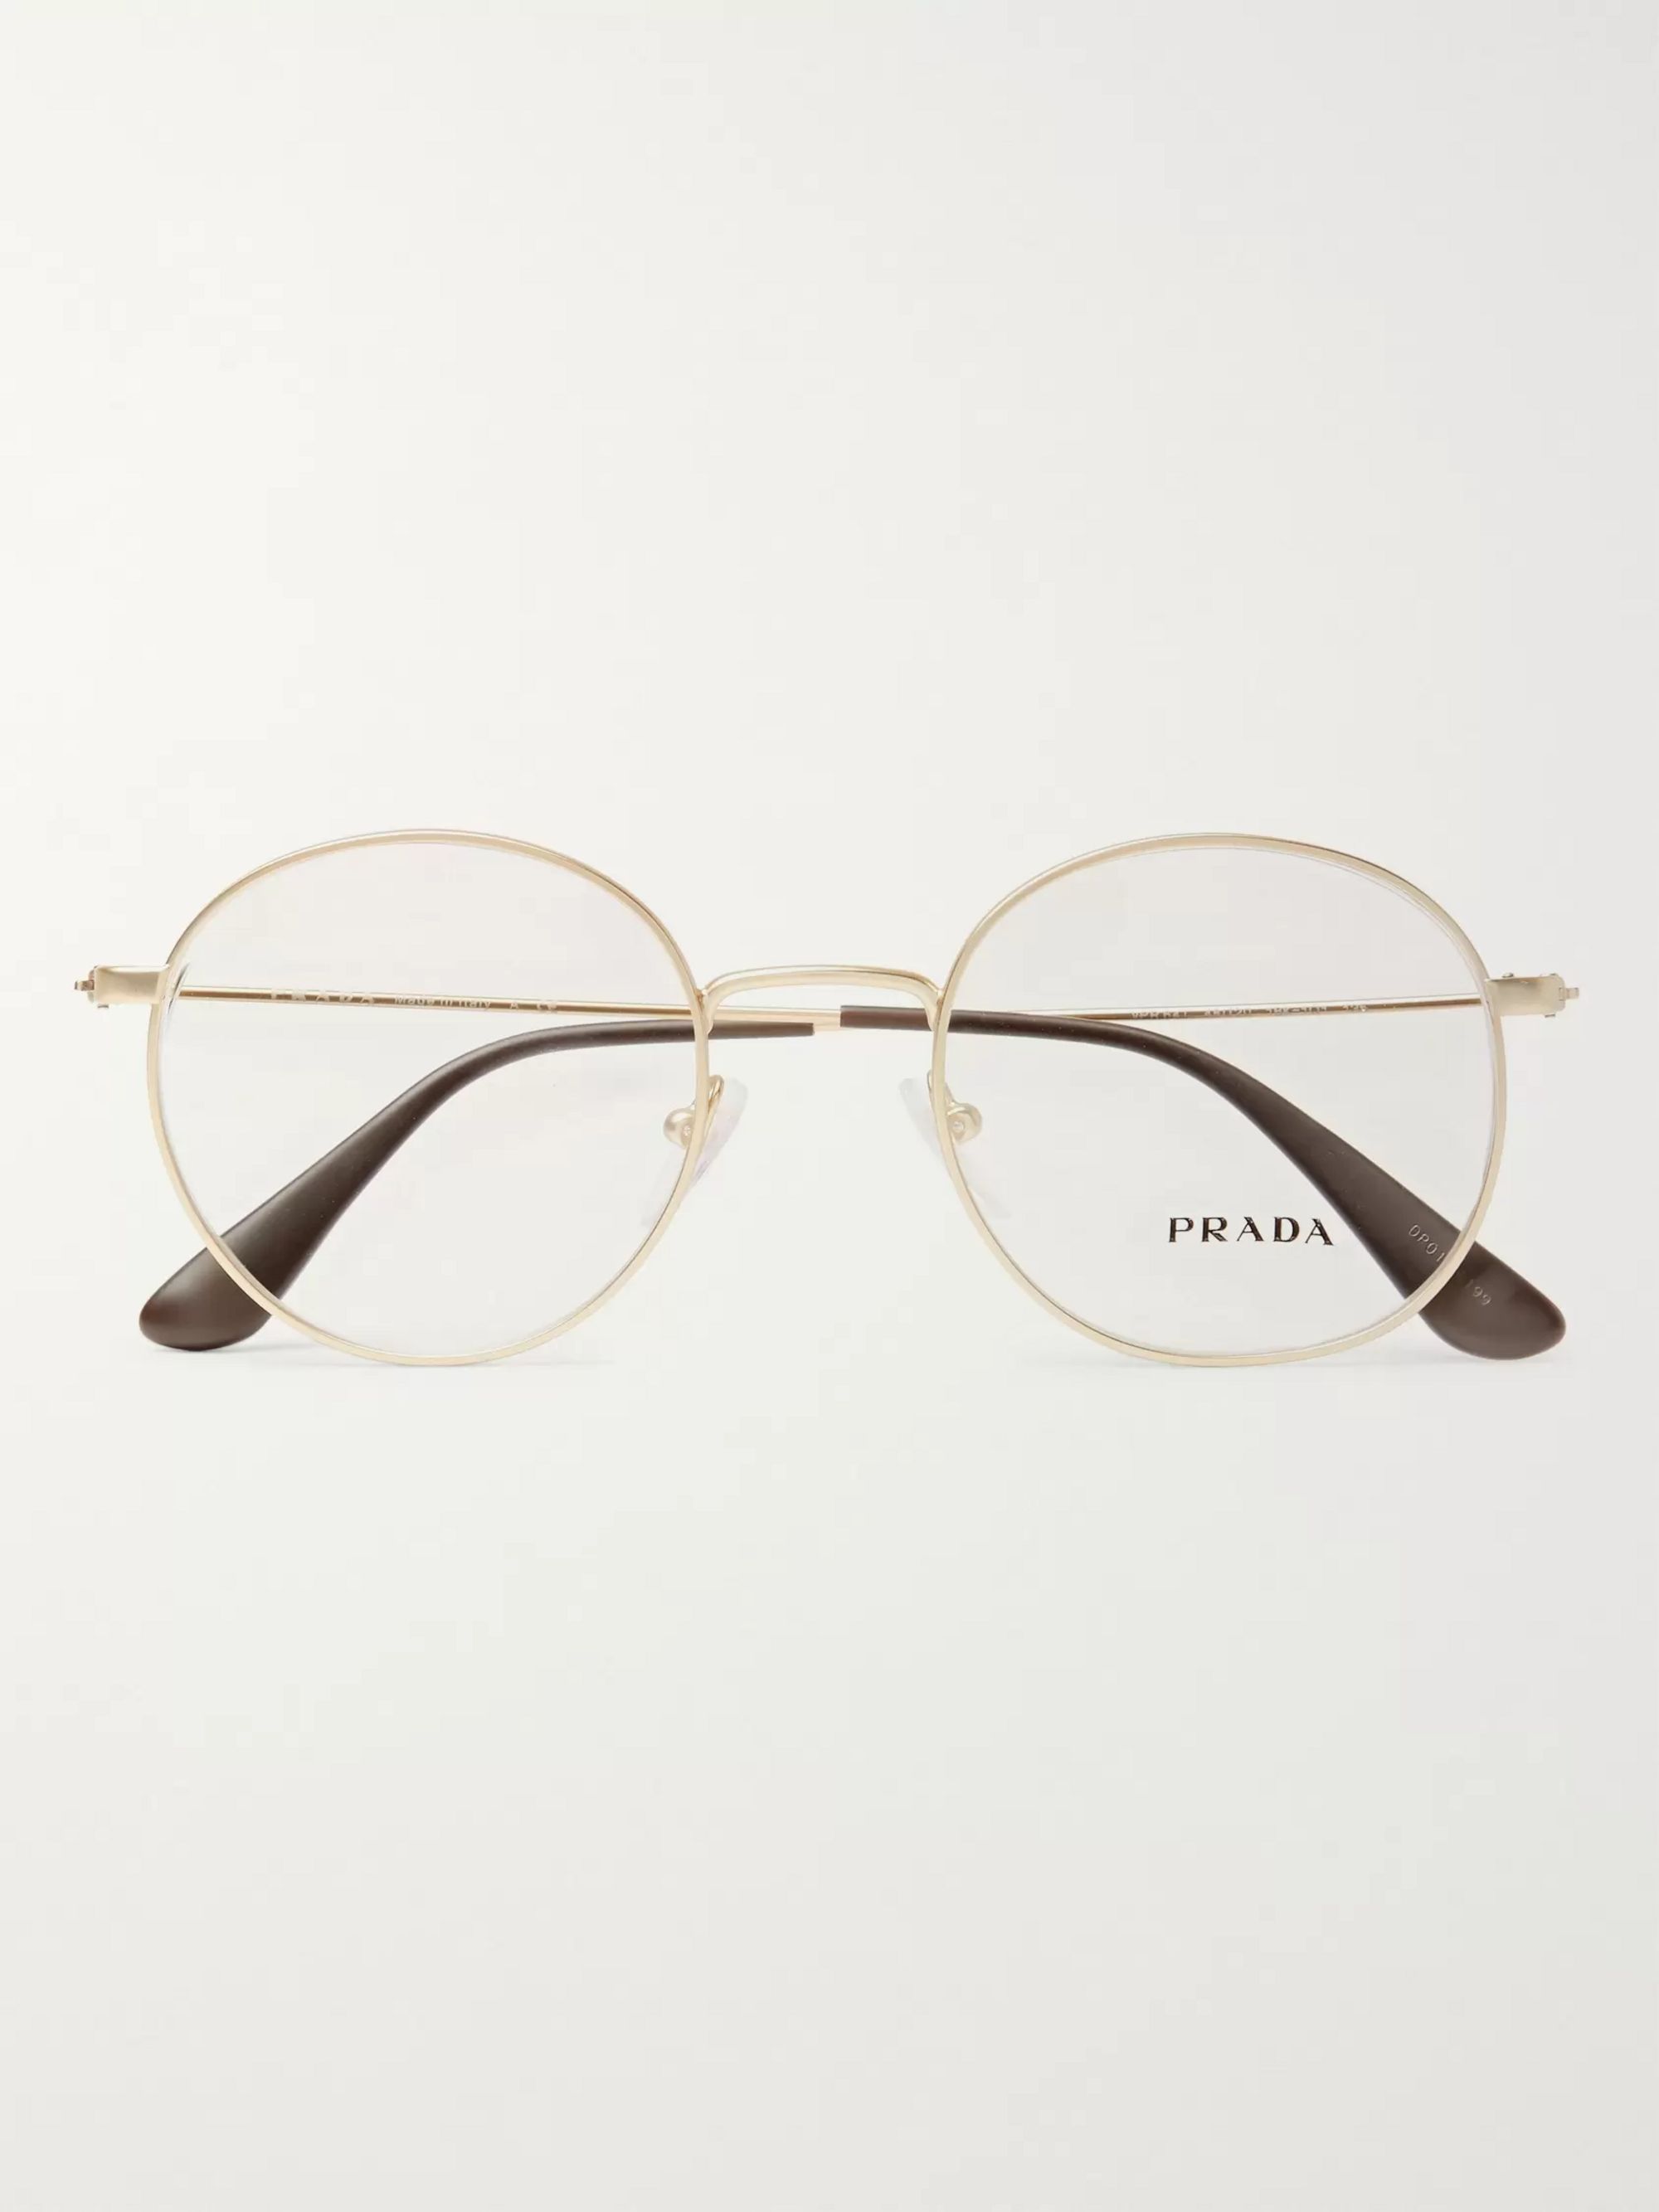 prada gold frame glasses